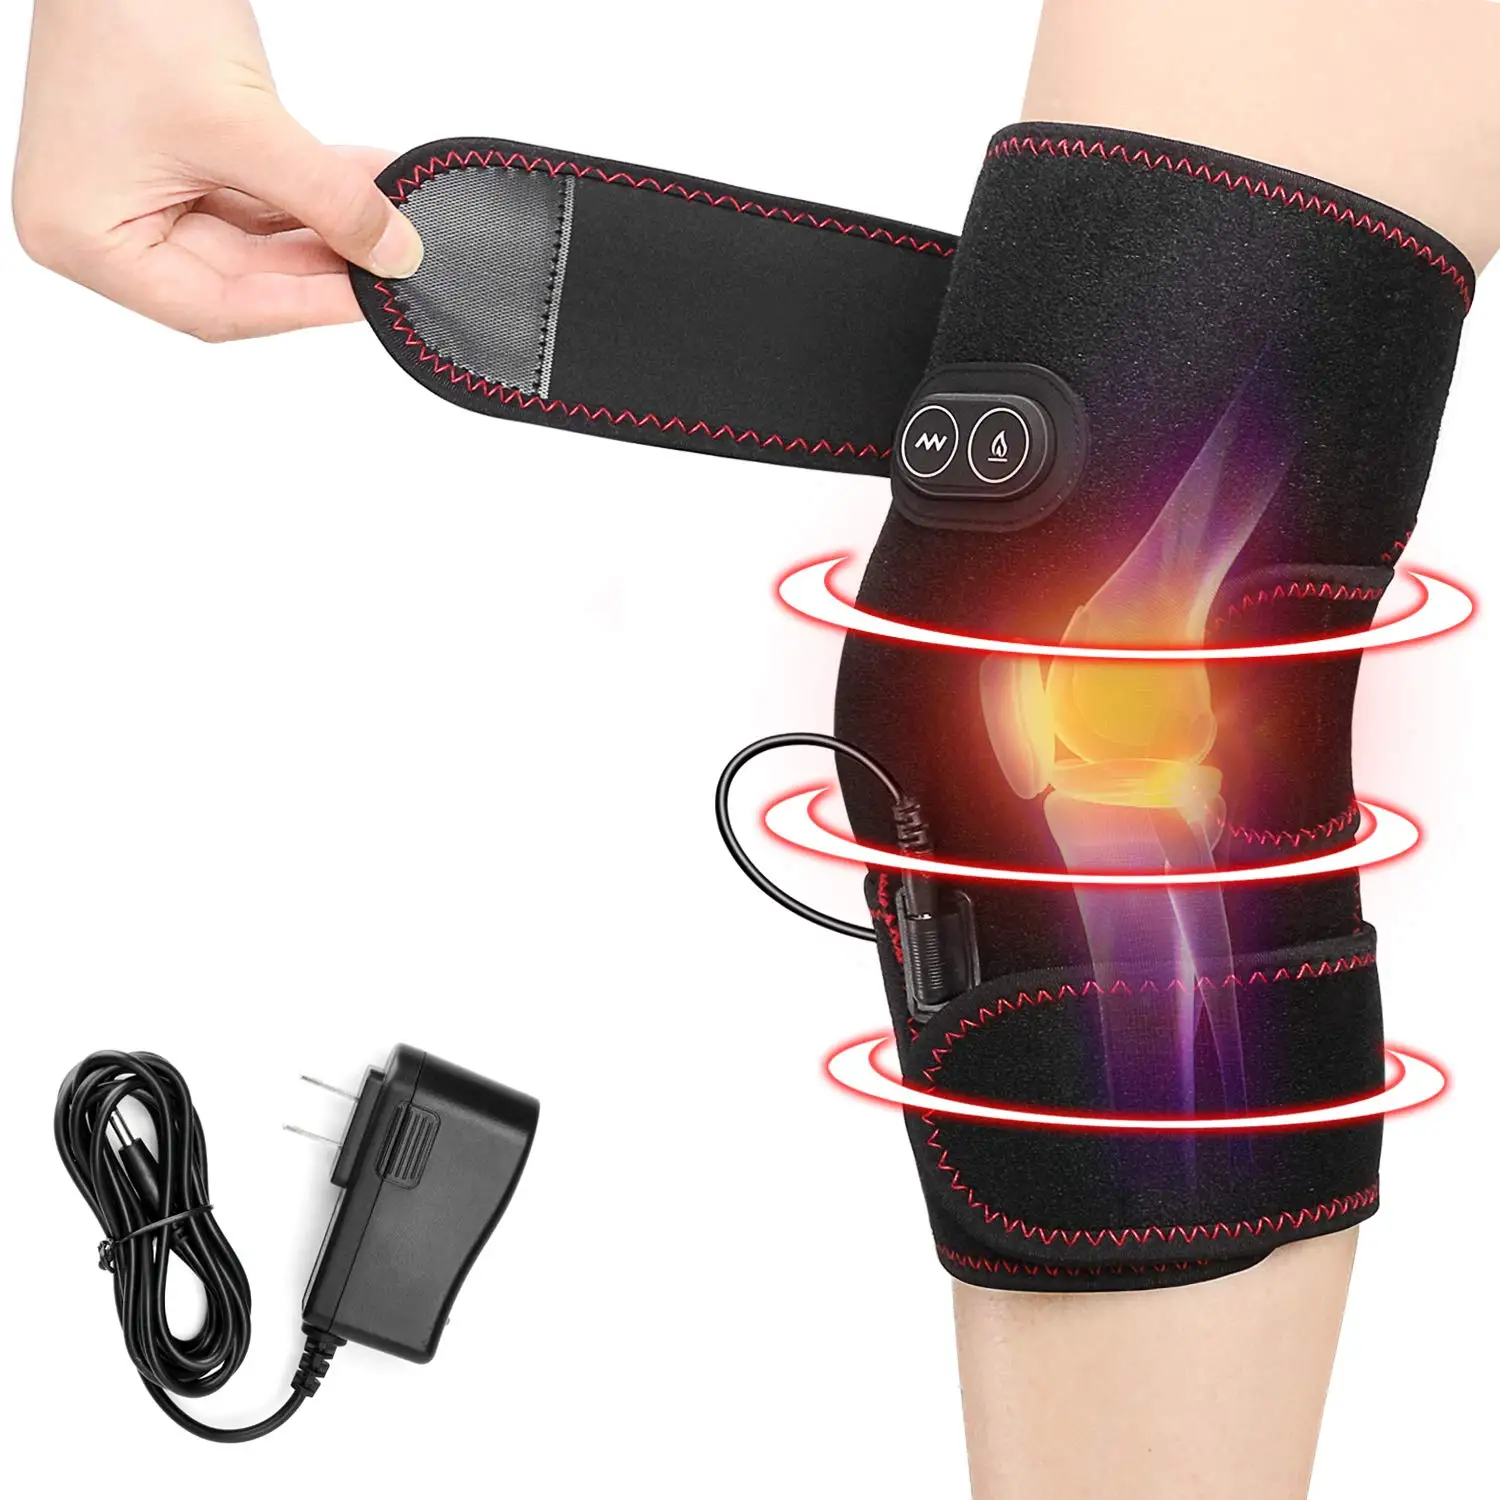 

Adjustable Heated Knee Brace Wrap Heat and Vibration Knee Massager for Arthritis Knee Pain Relief, Black